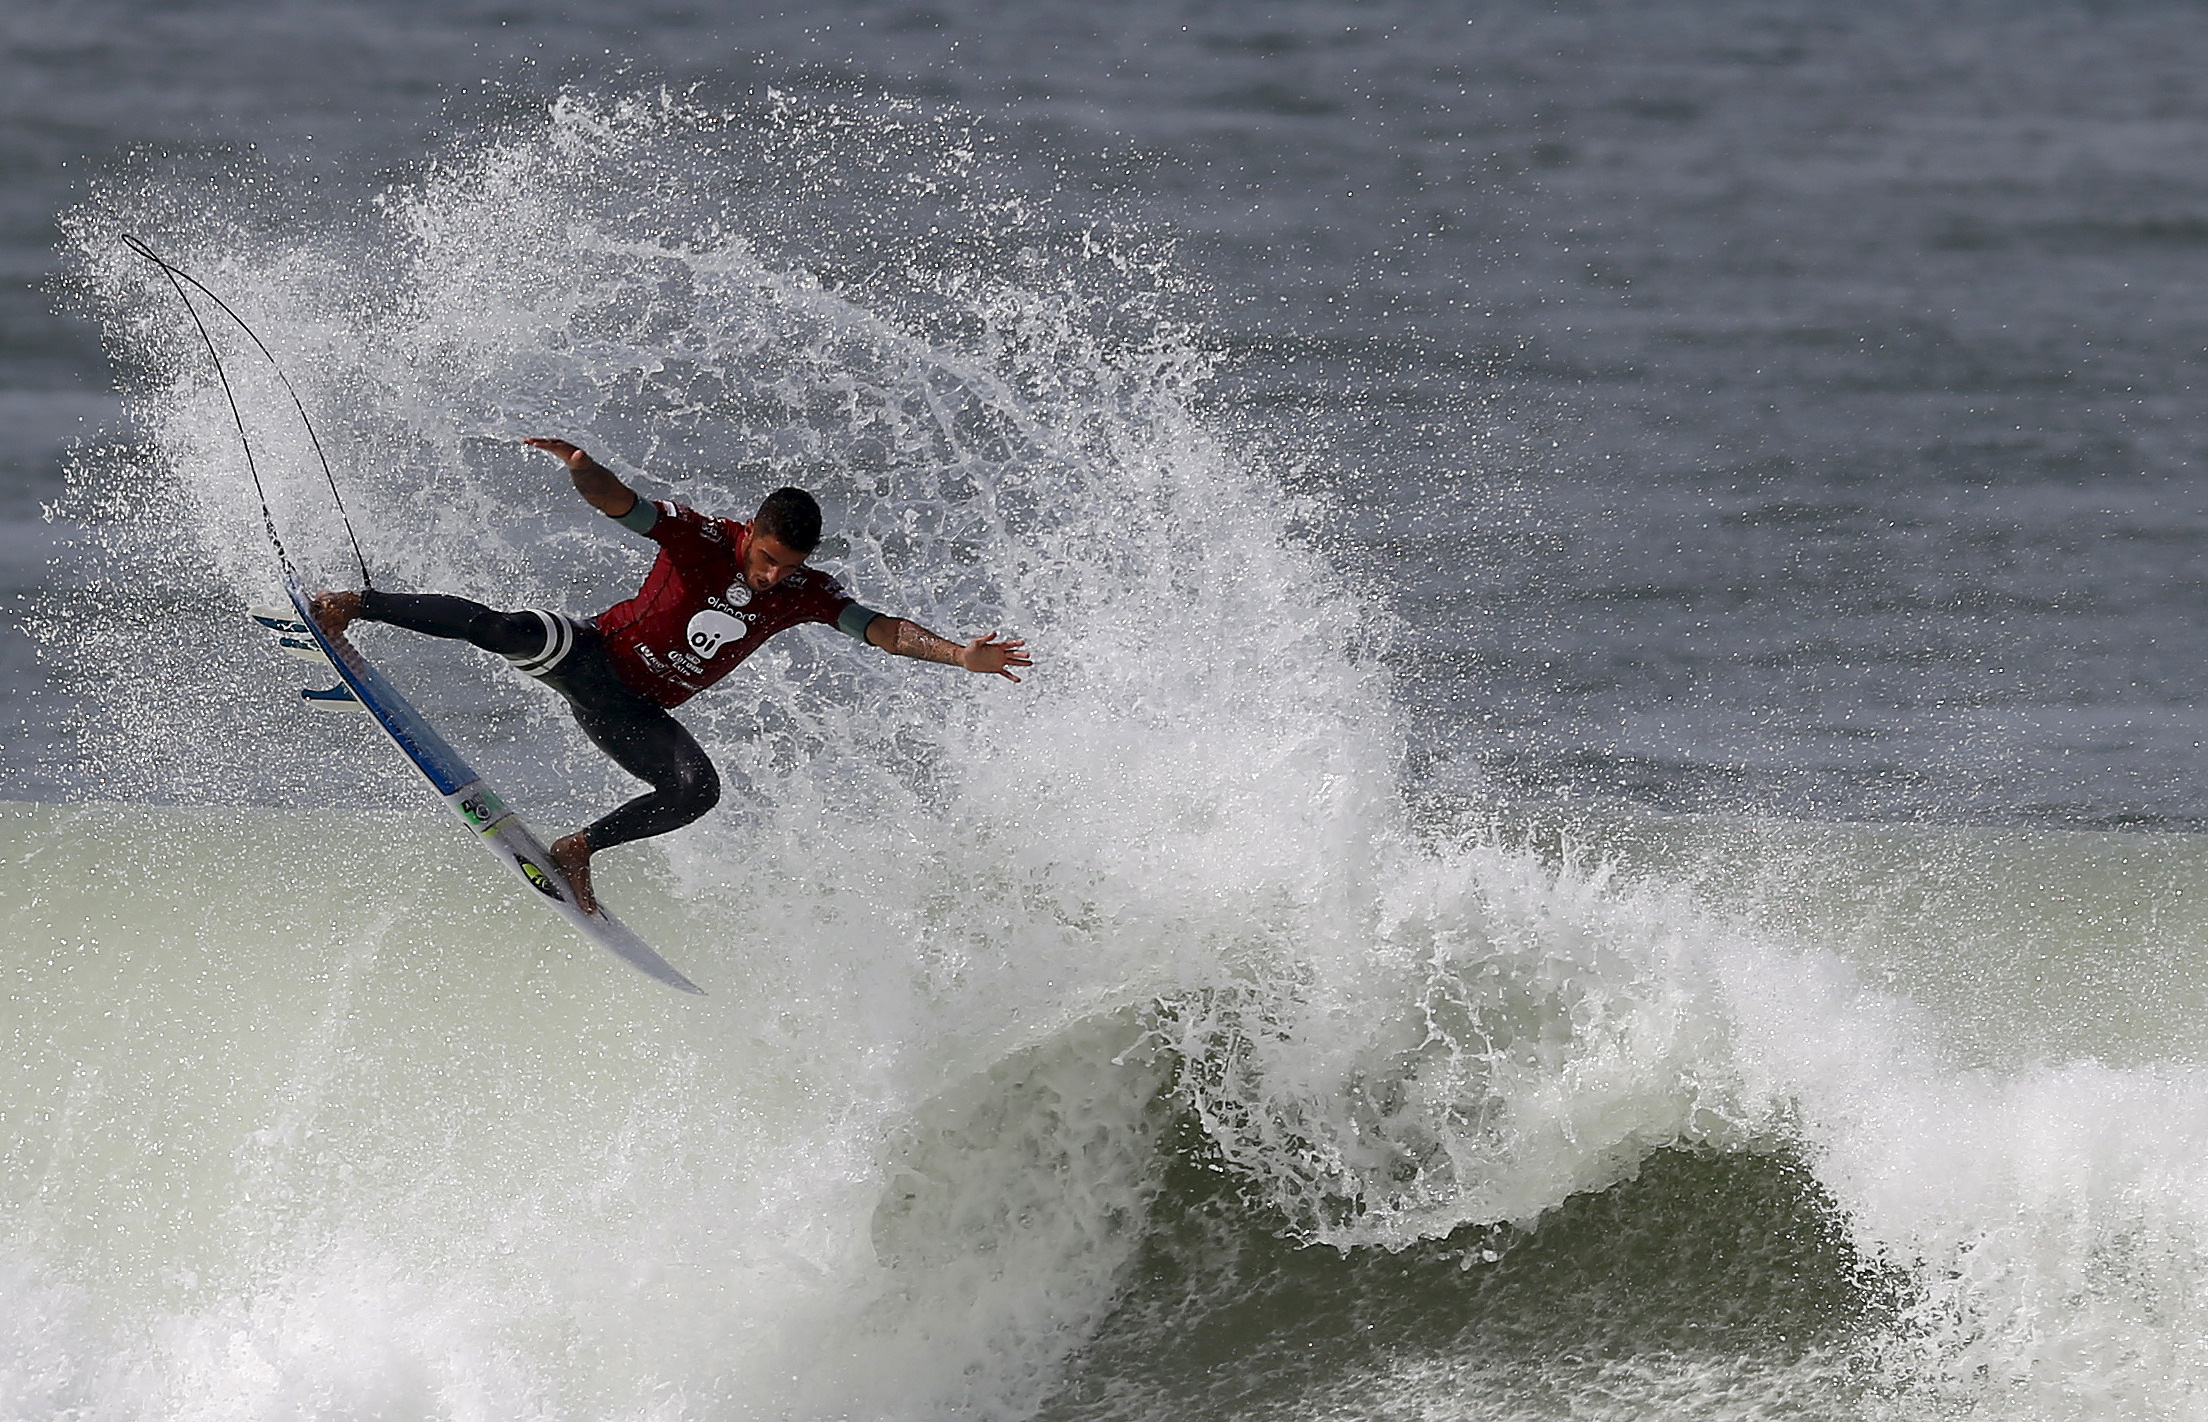 Toledo of Brazil surfs to win his semifinal of the men's World Surf League Rio Pro championship in Rio de Janeiro